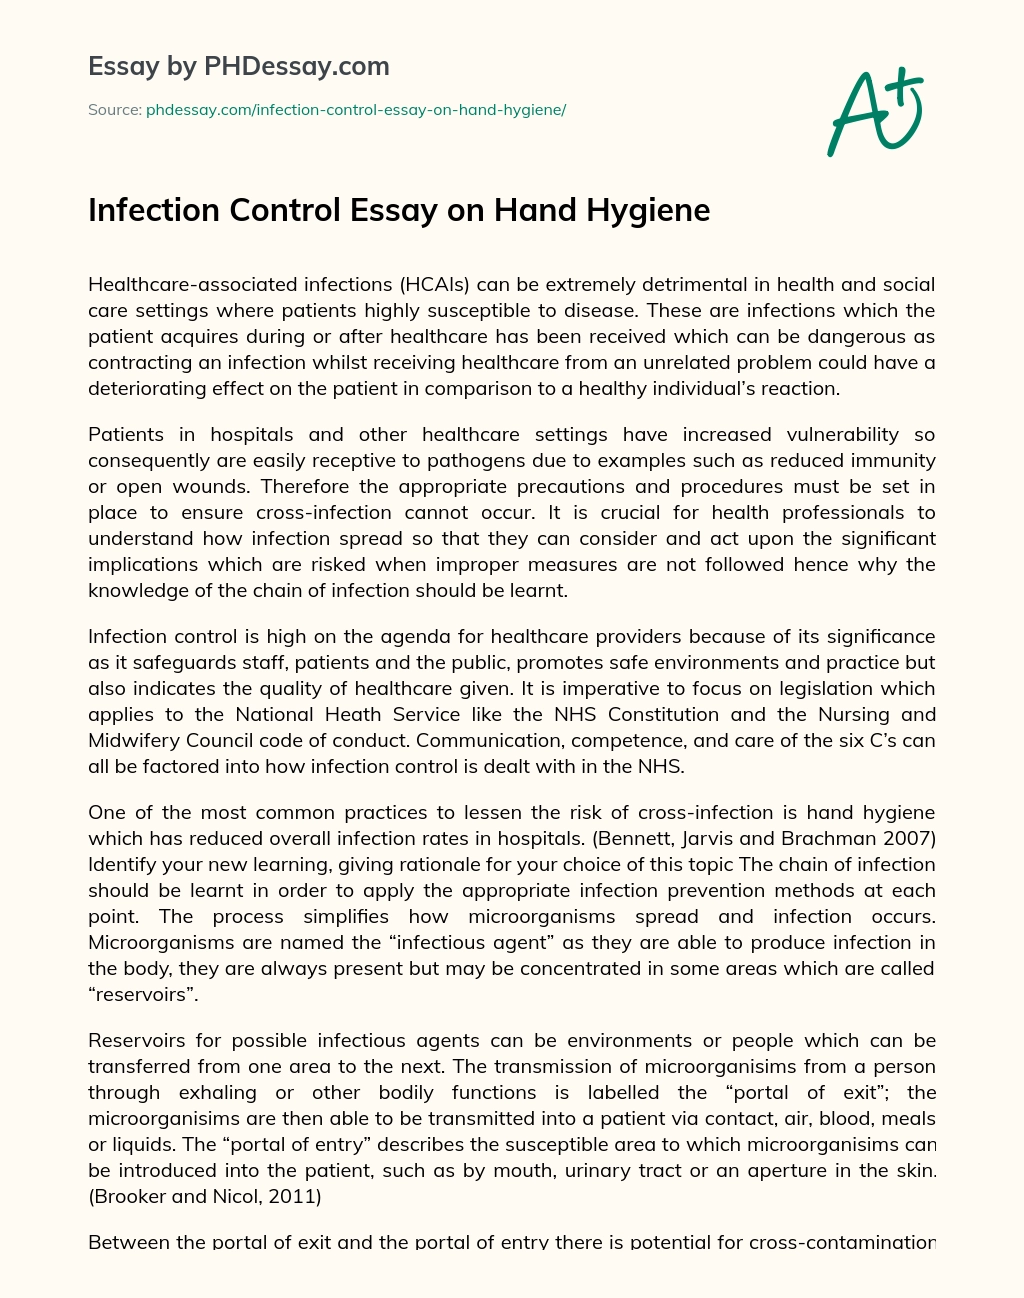 Infection Control Essay on Hand Hygiene essay